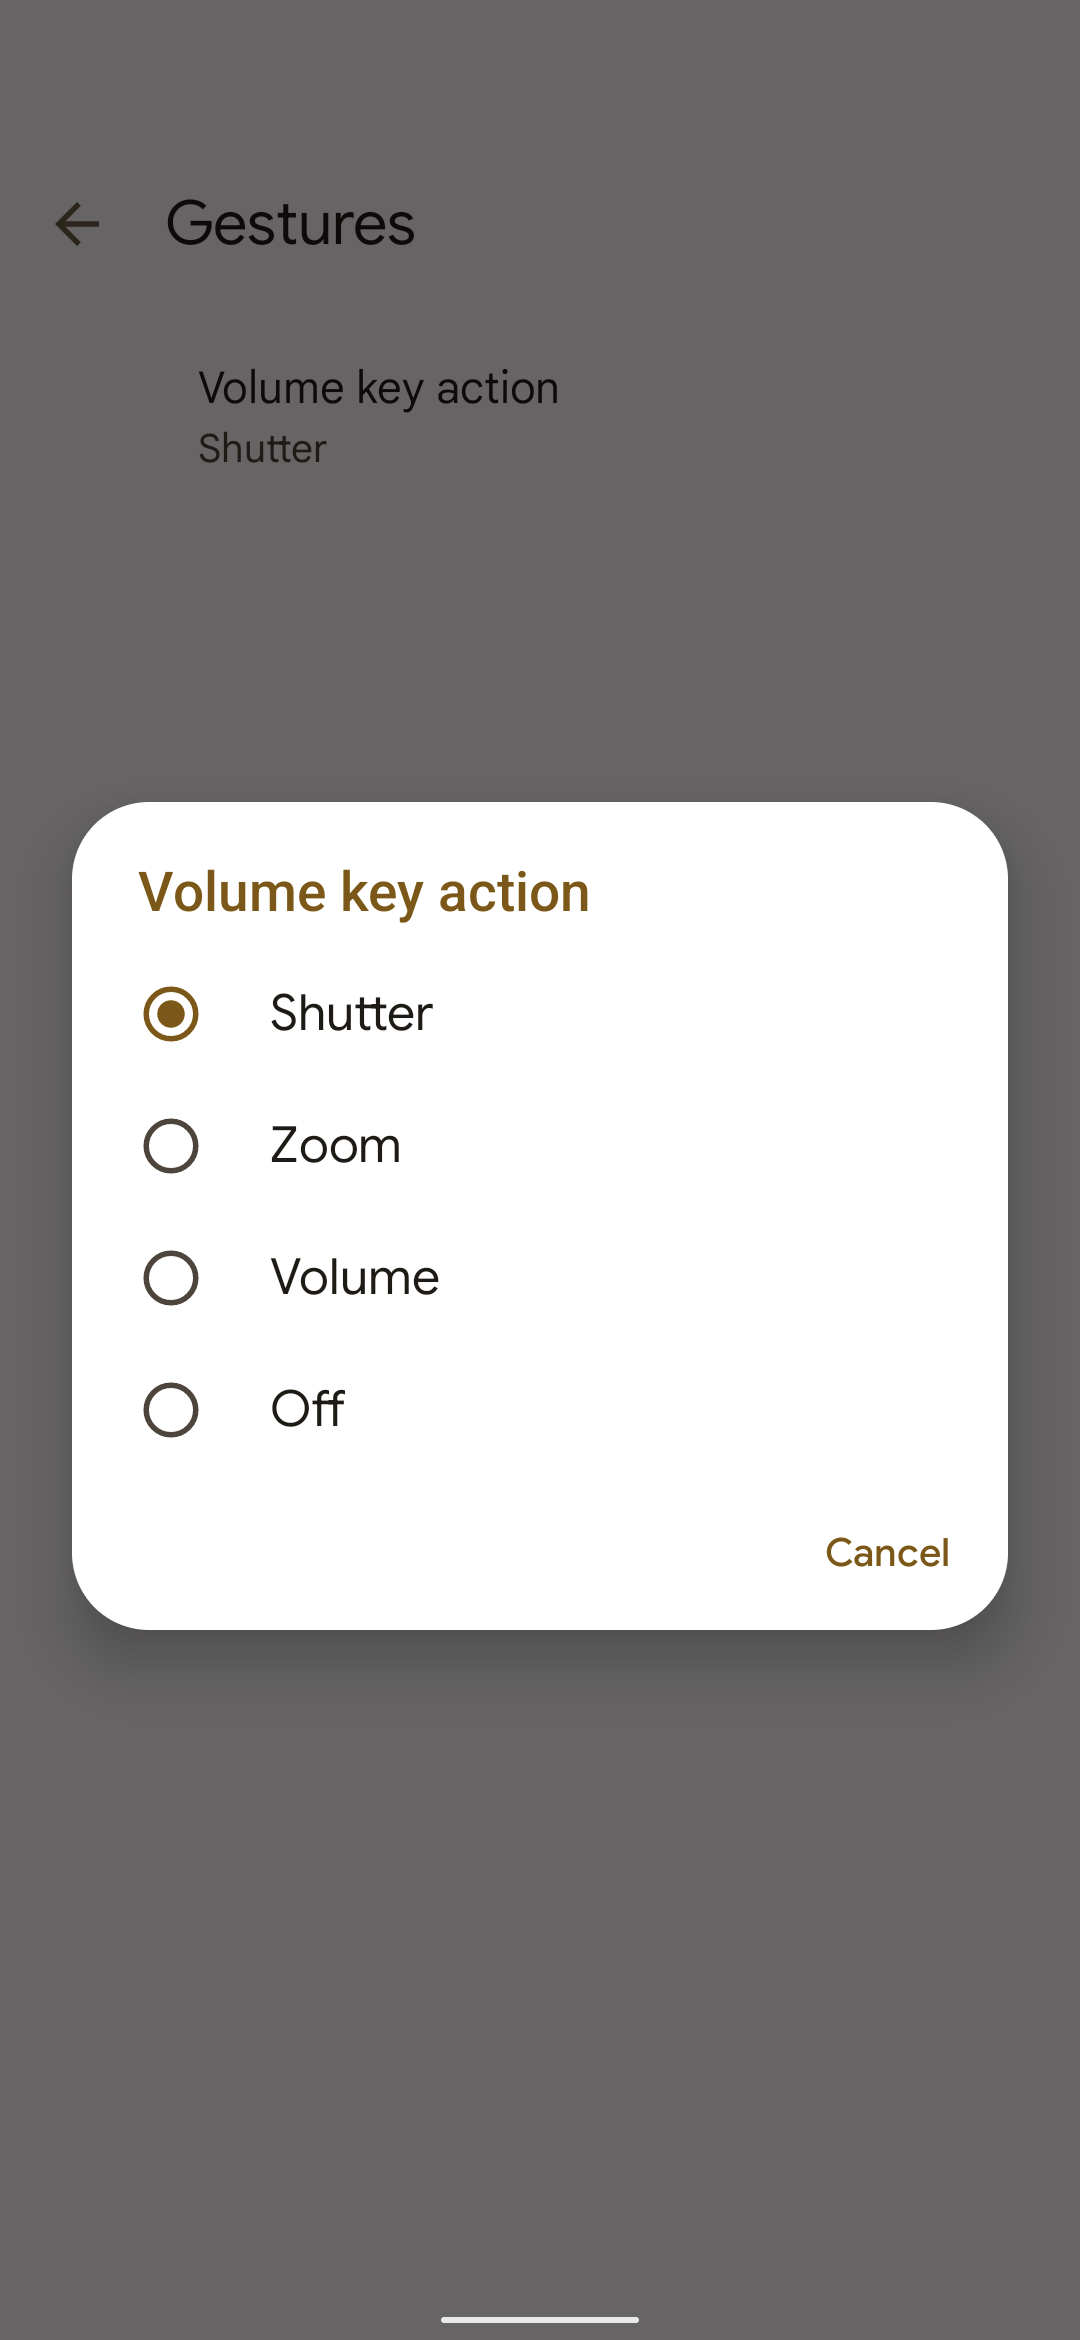 Google Camera's volume key gesture options